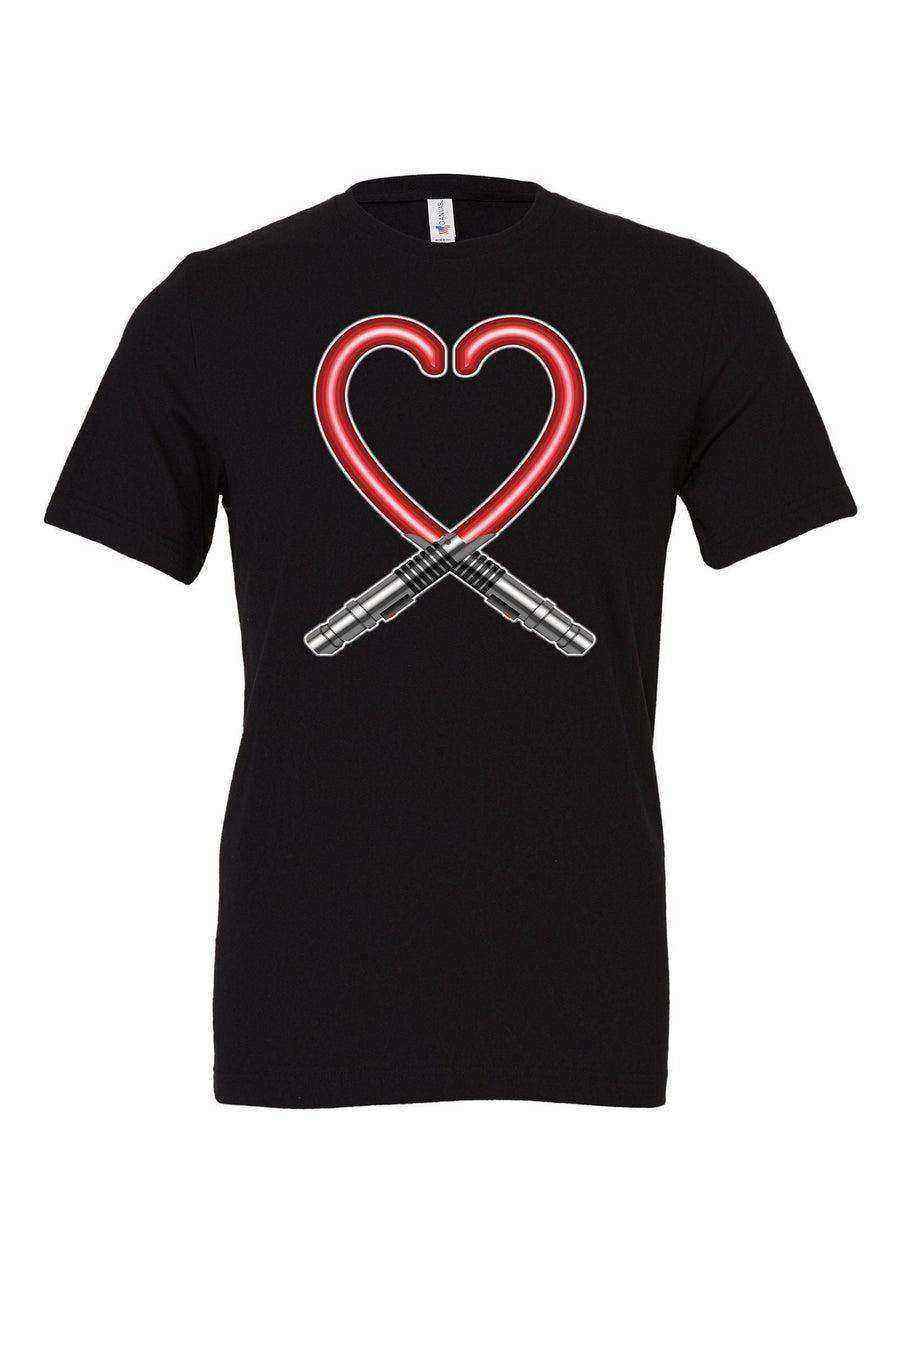 Toddler | Star Wars Love Shirt | Valentines Day Shirt | Lightsaber - Dylan's Tees